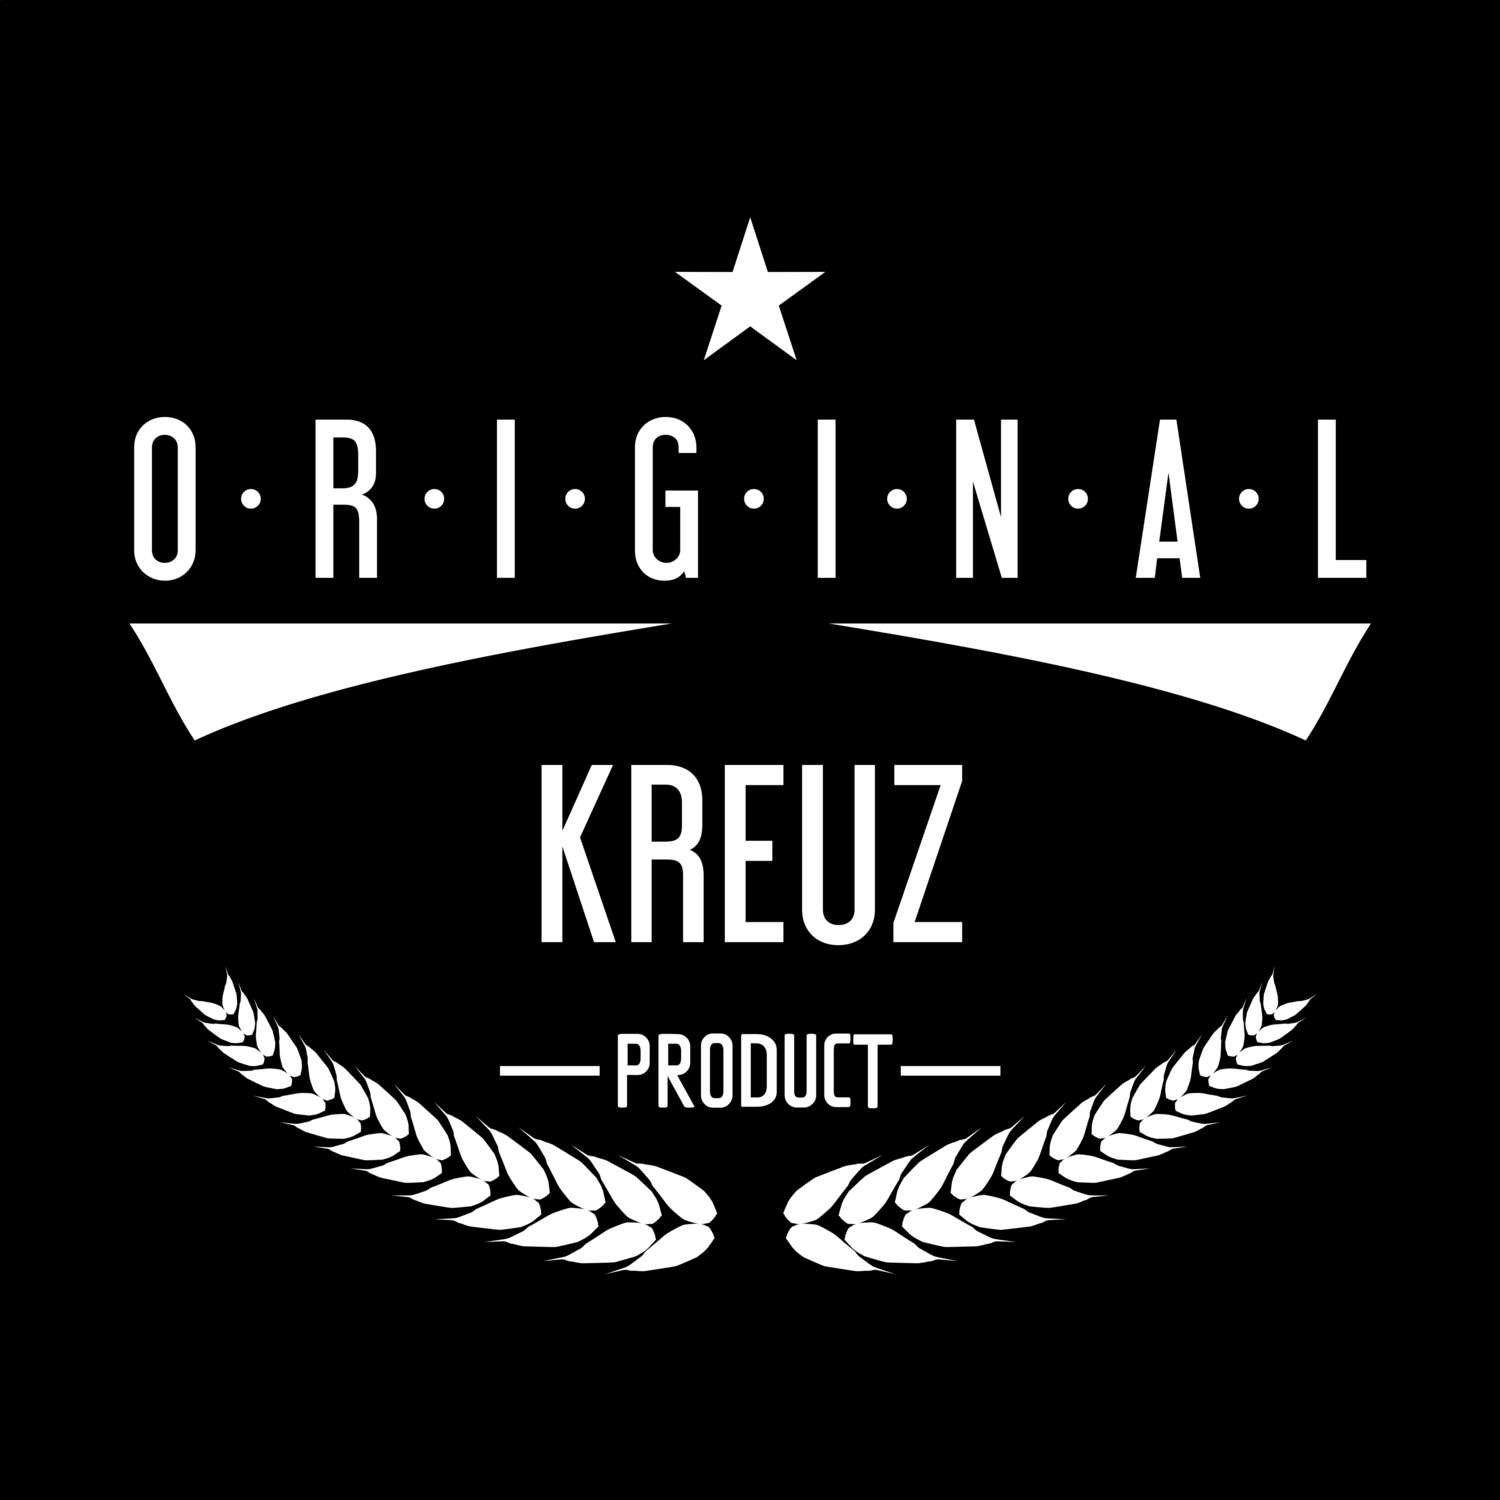 Kreuz T-Shirt »Original Product«